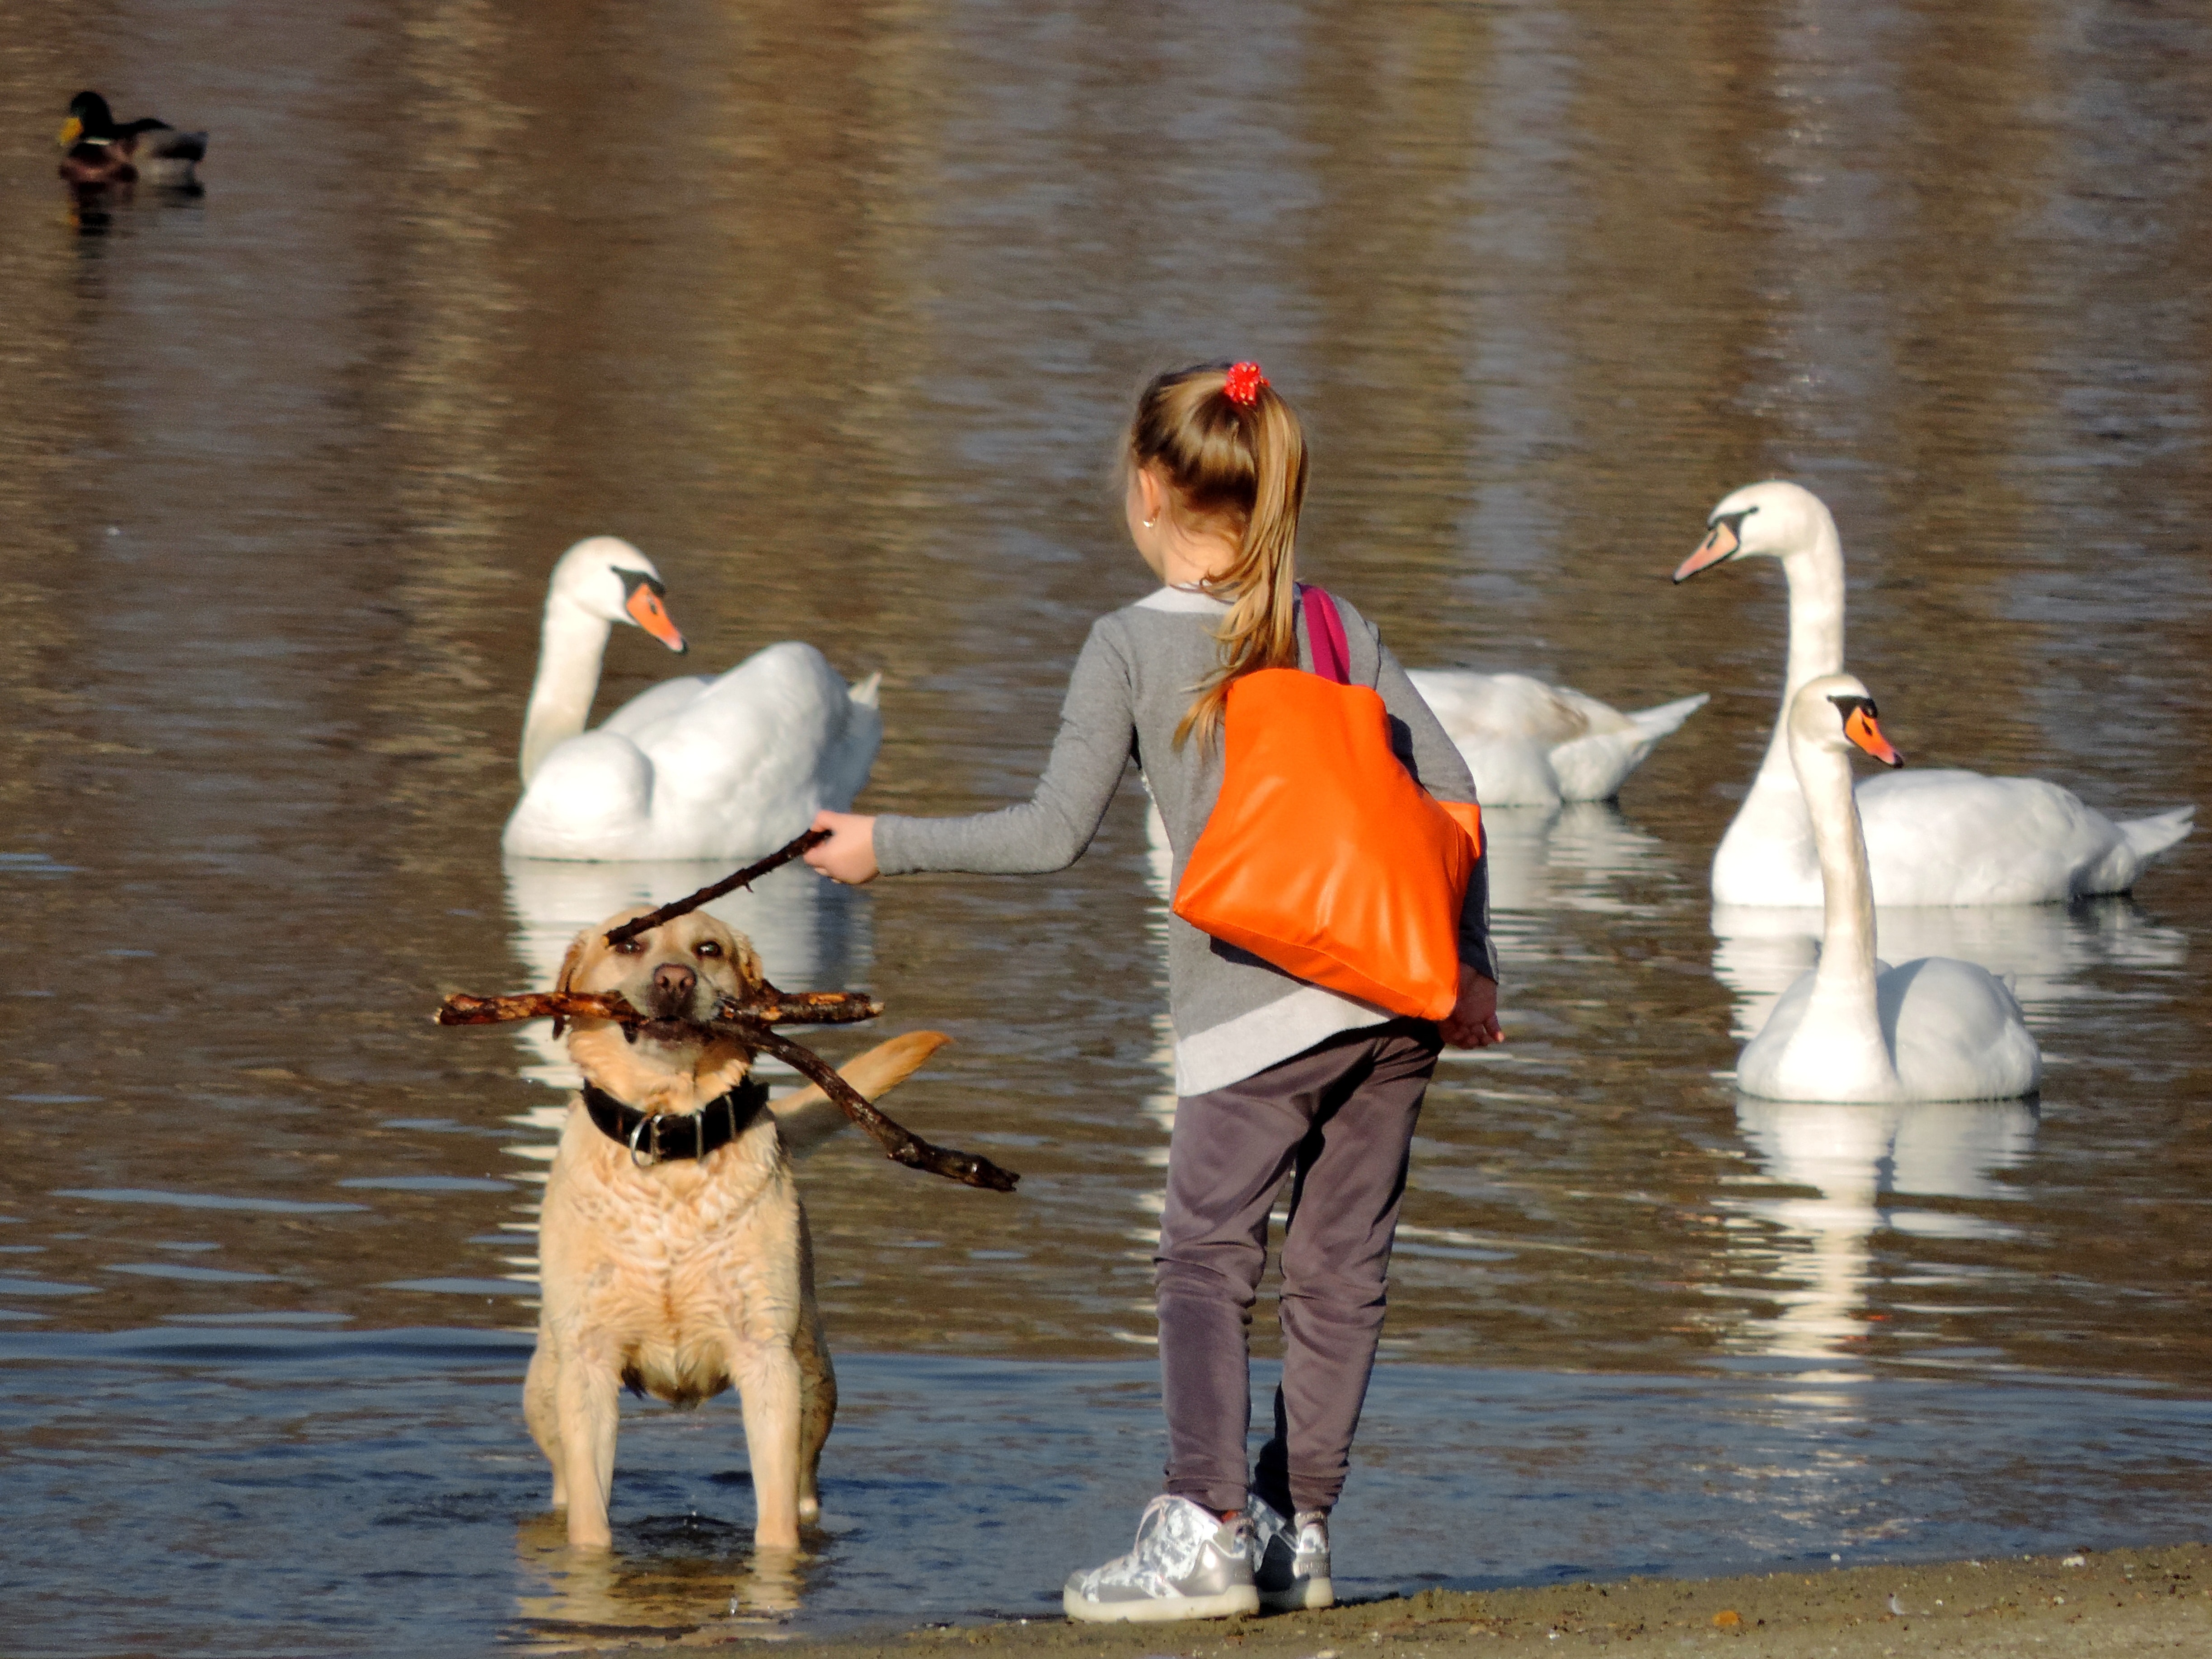 Free picture: child, girl, hunting dog, swan, lake, water 